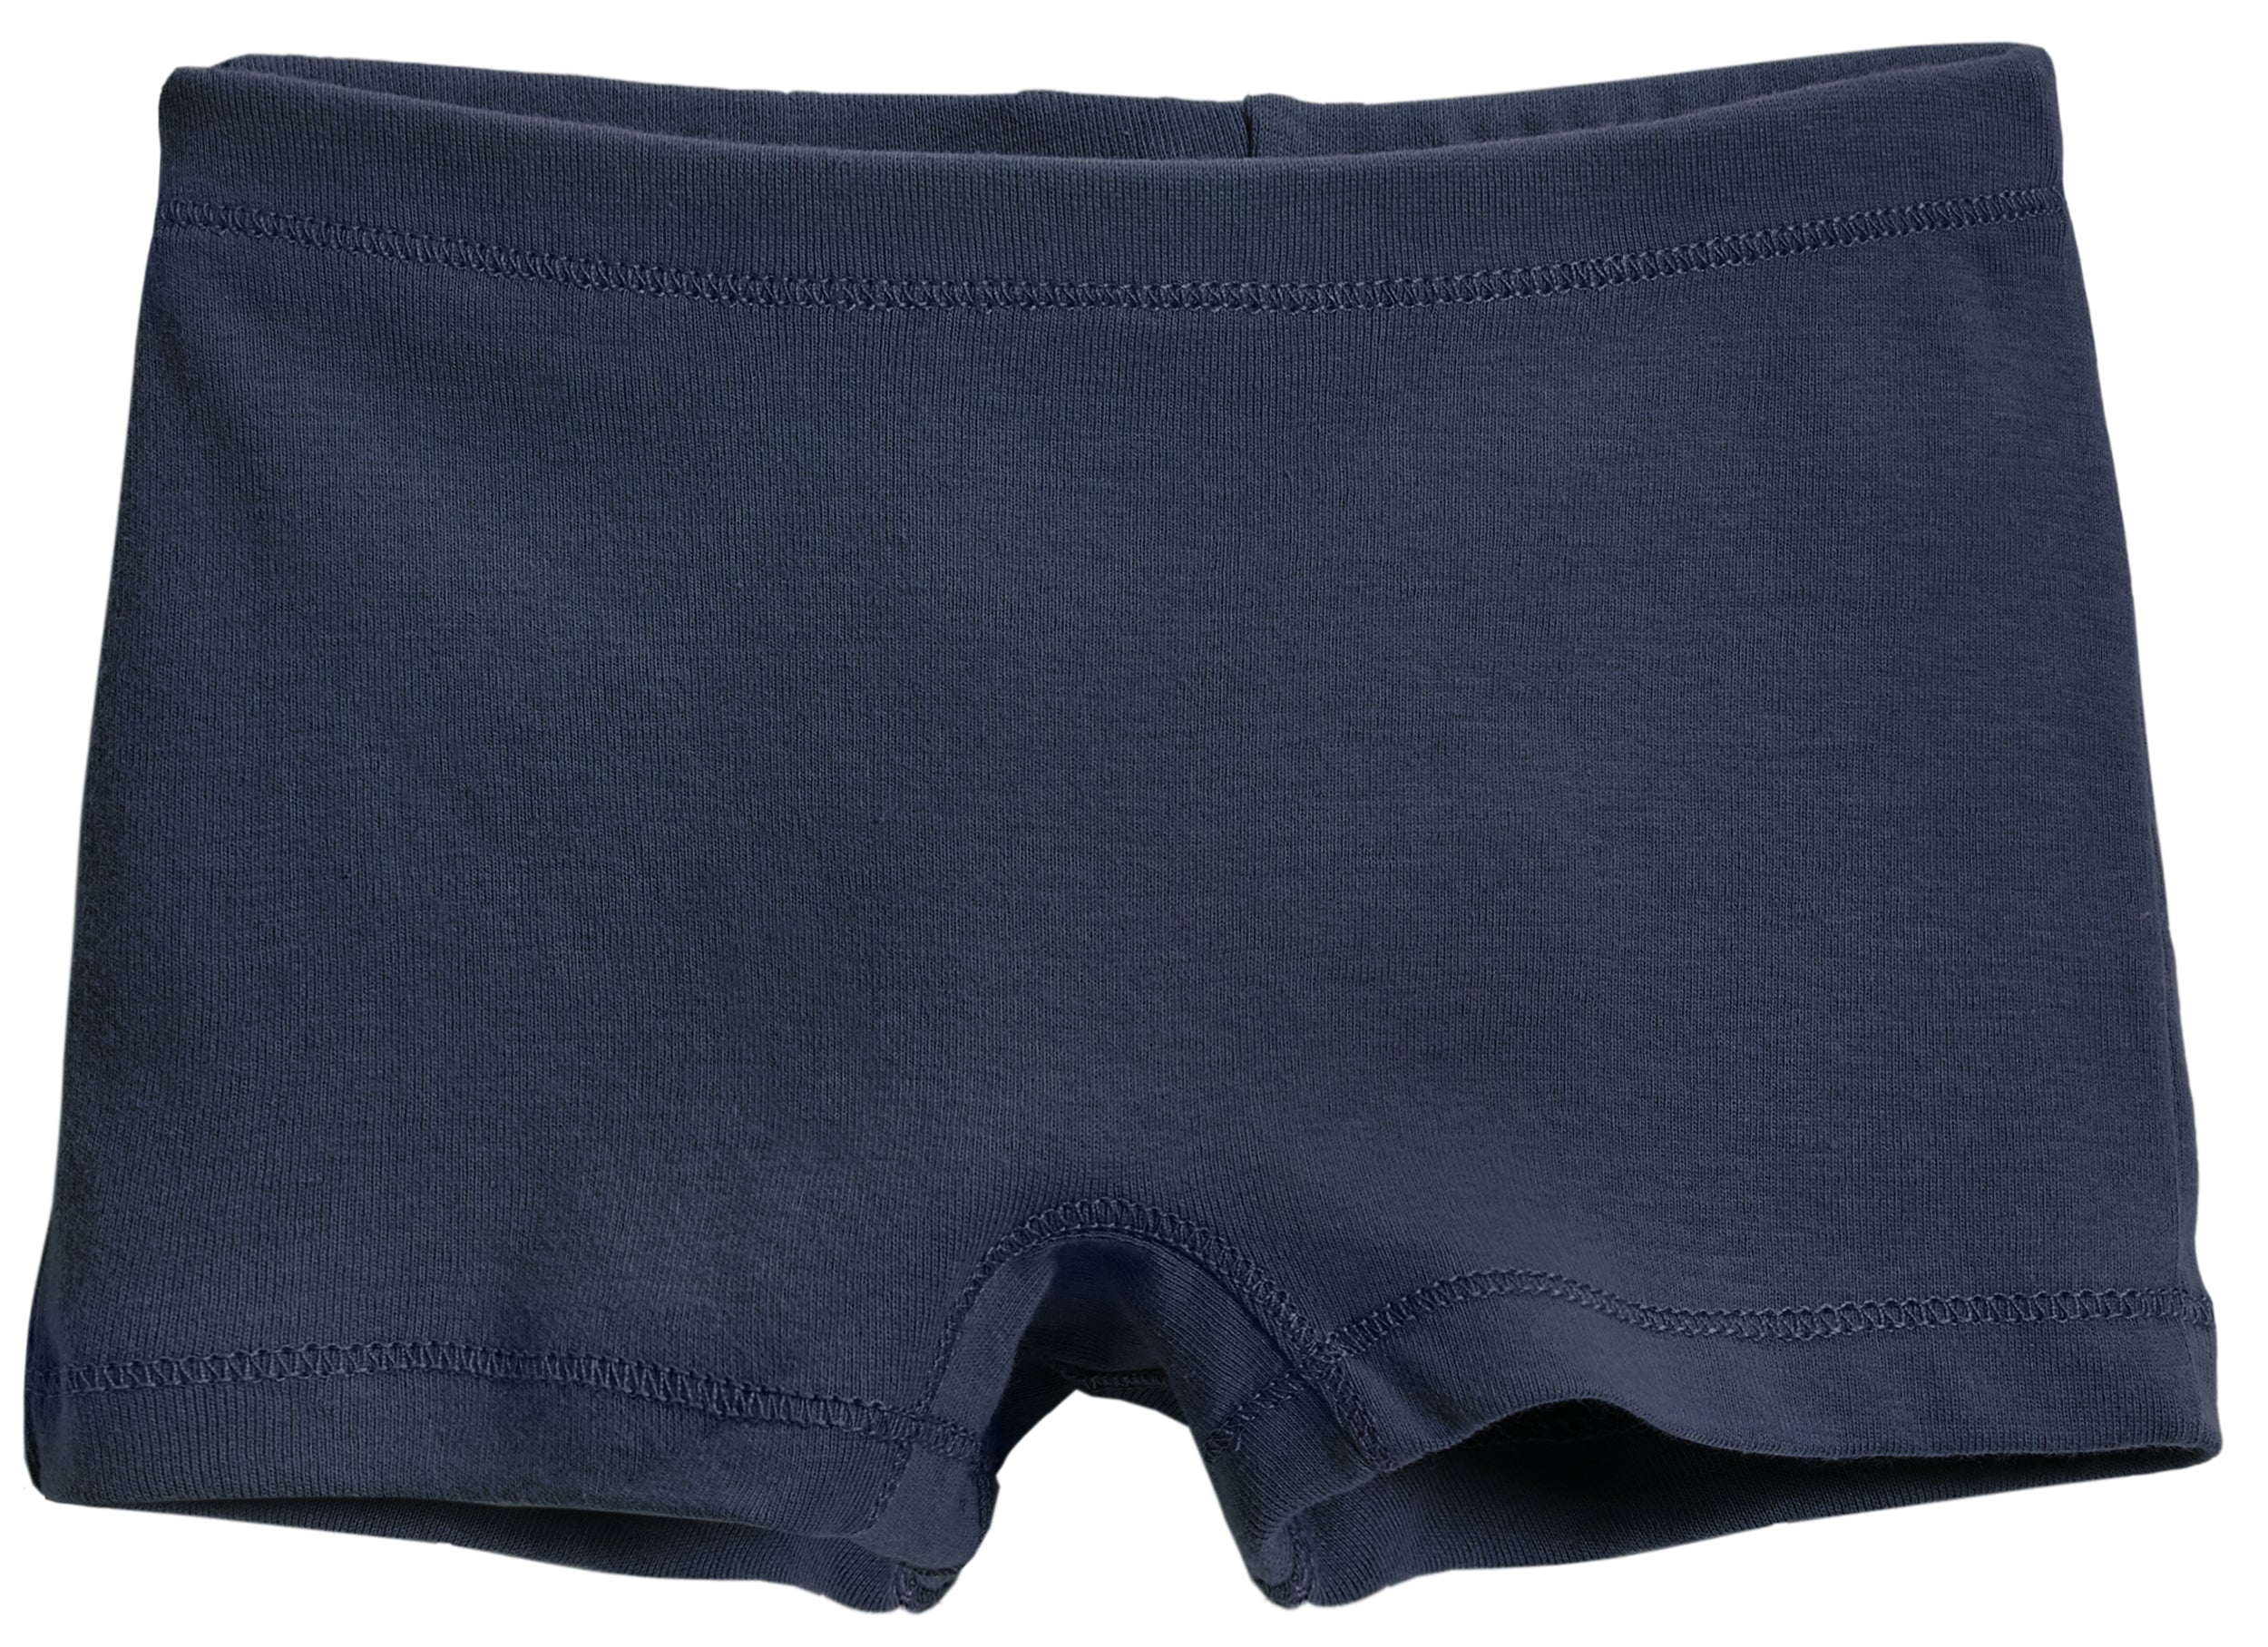 Cotton Underwear Women Casual Boy Short Panties Brand Quality